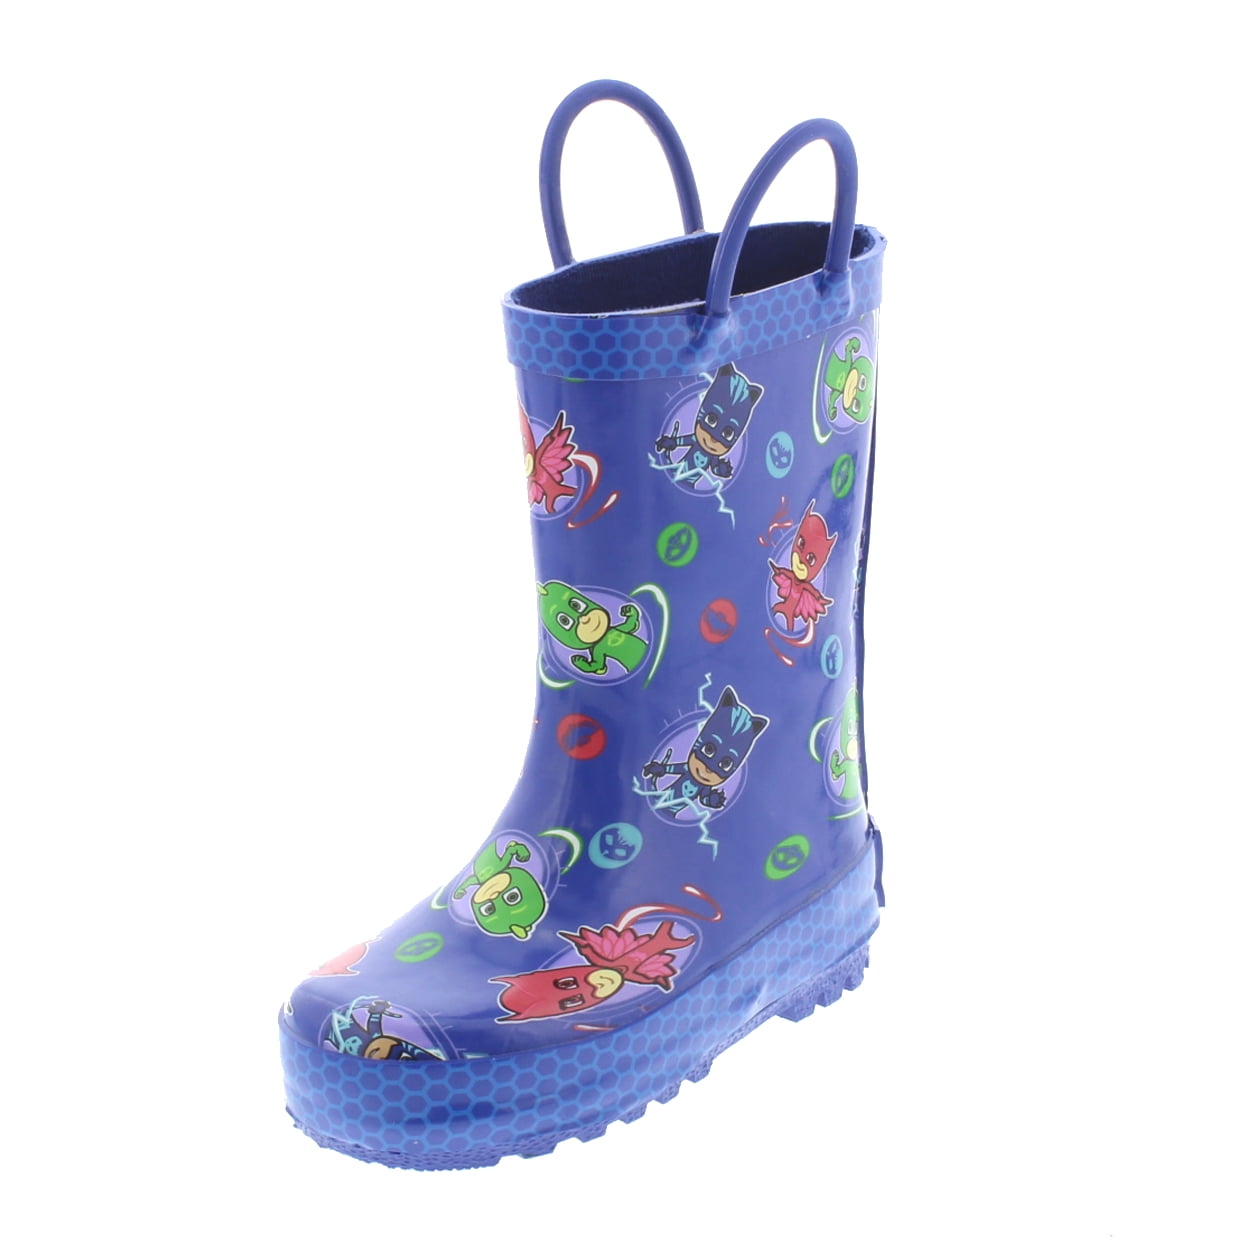 girls rain boots at walmart